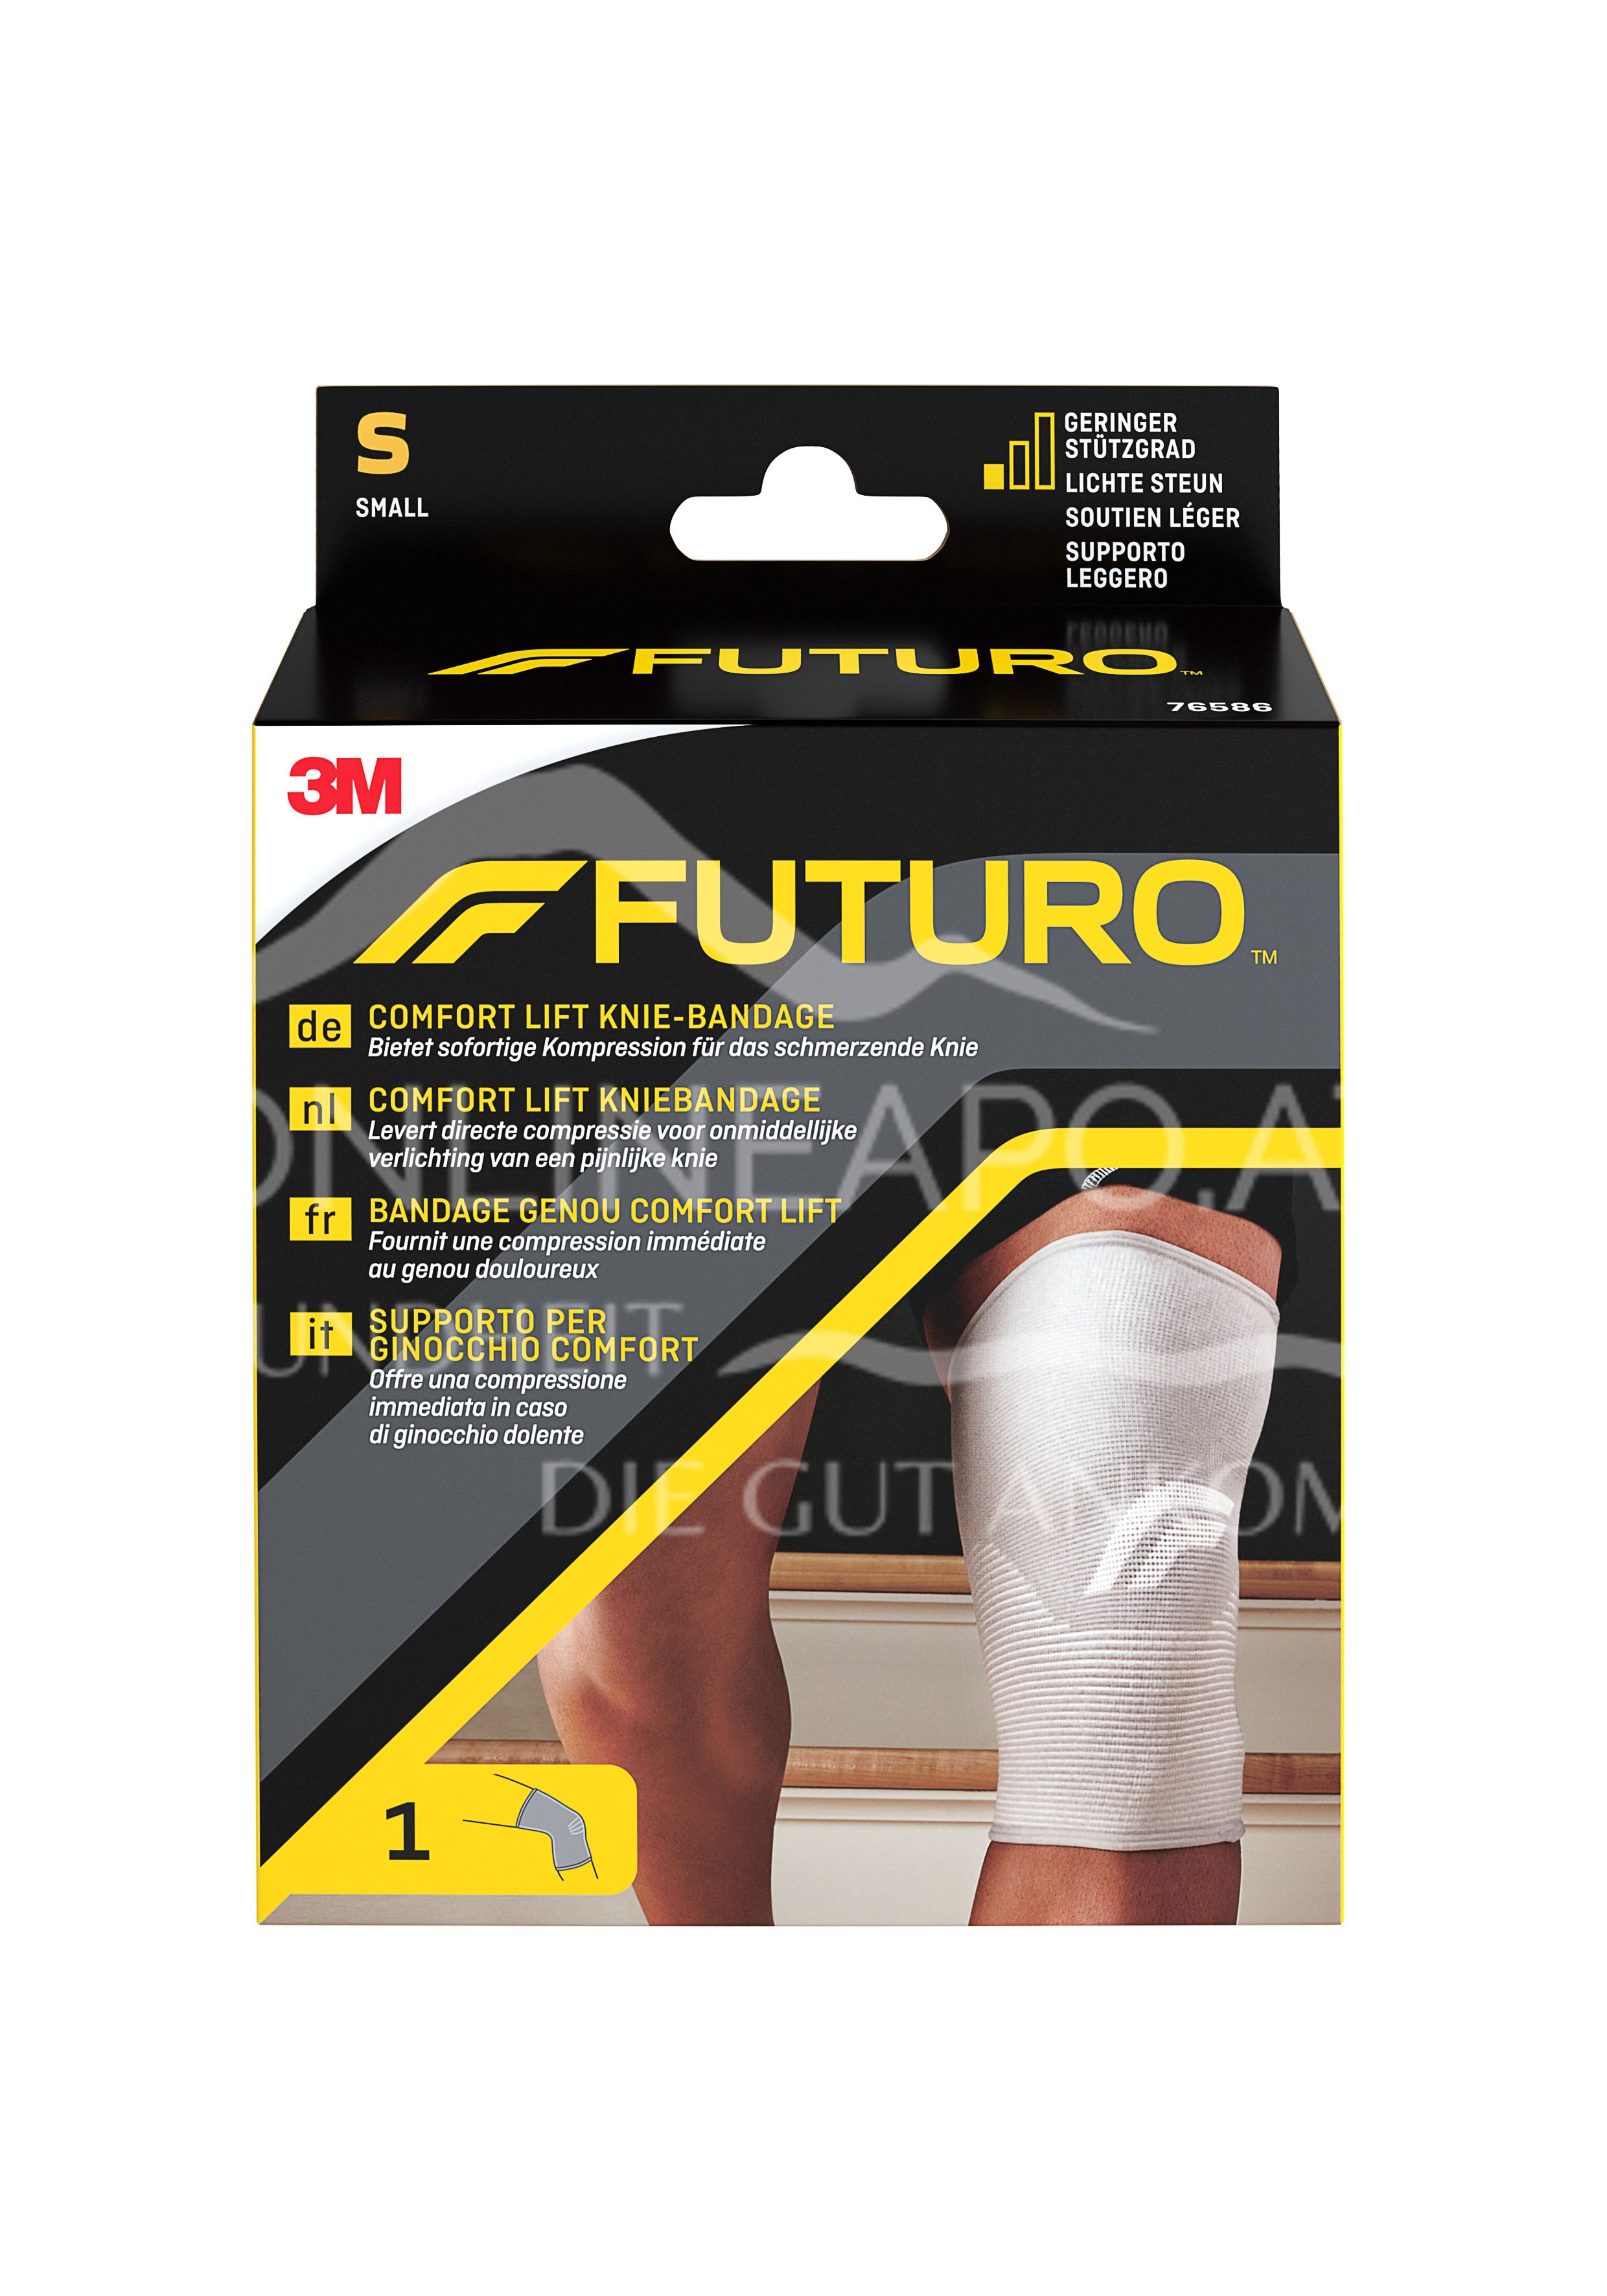 3M FUTURO™ Comfort Lift Knie-Bandage 76586, Größe S